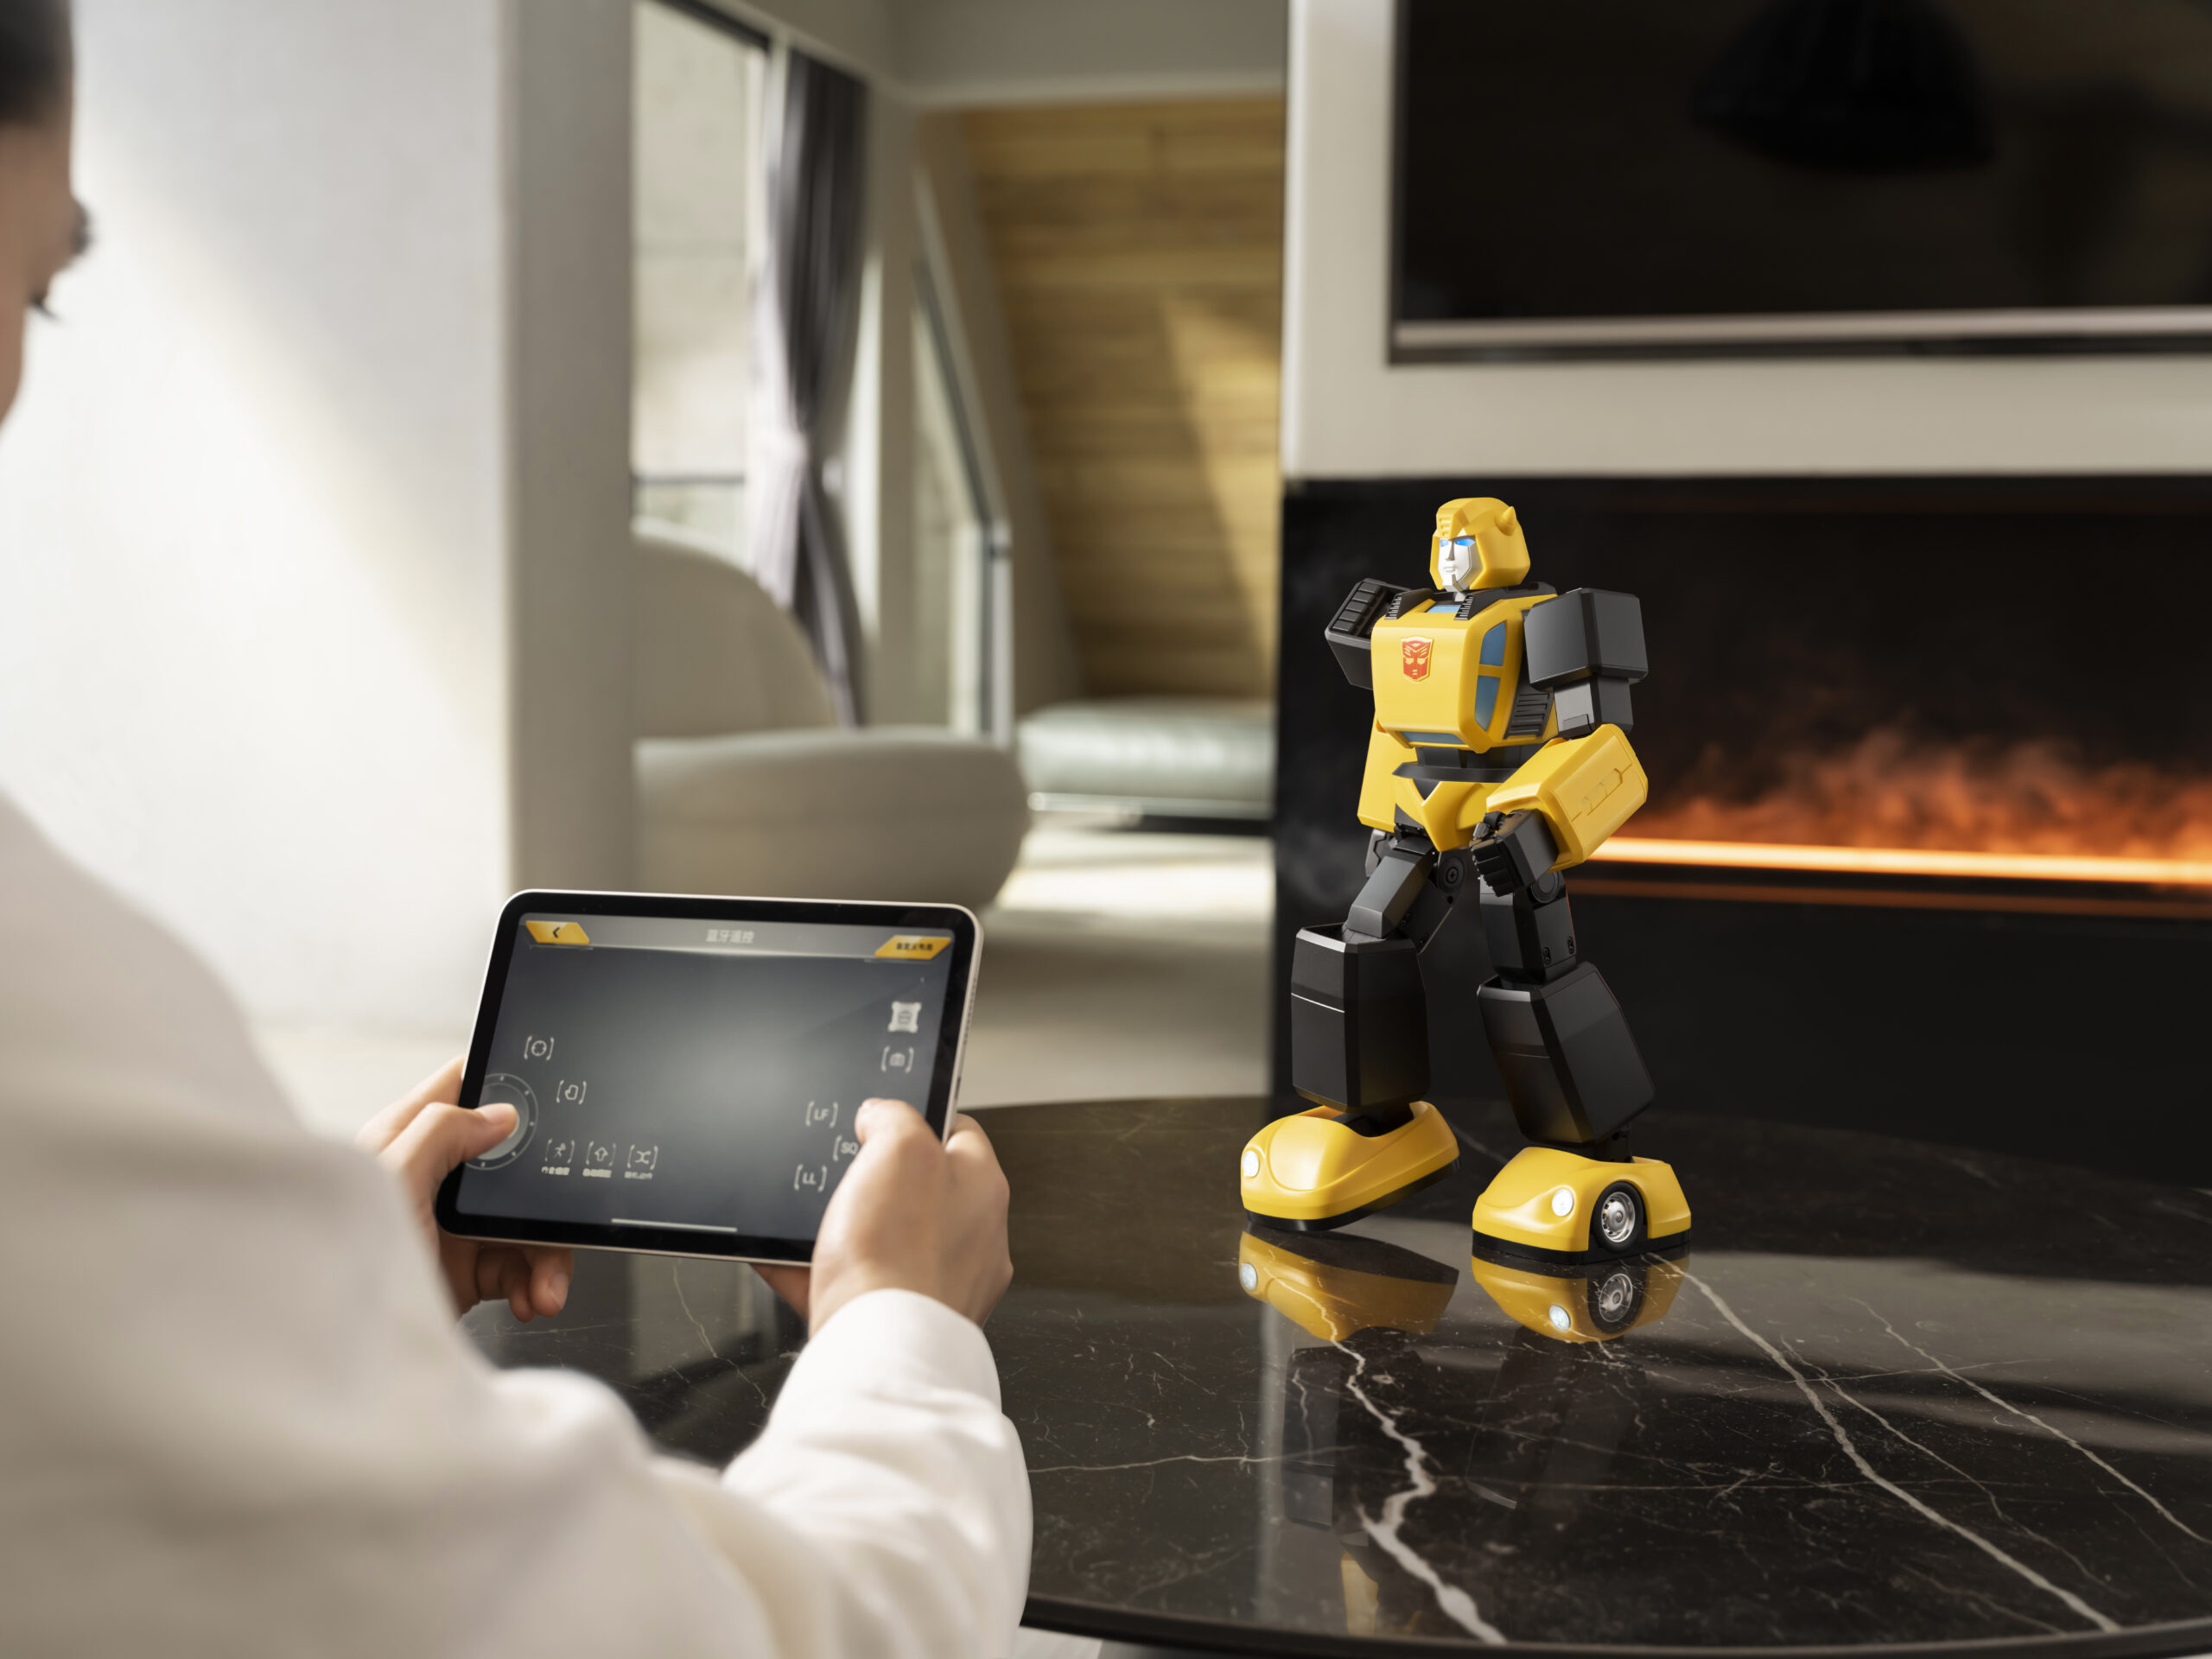 Bumblebee G1 Transformers Robot product image (Robosen Robotics)